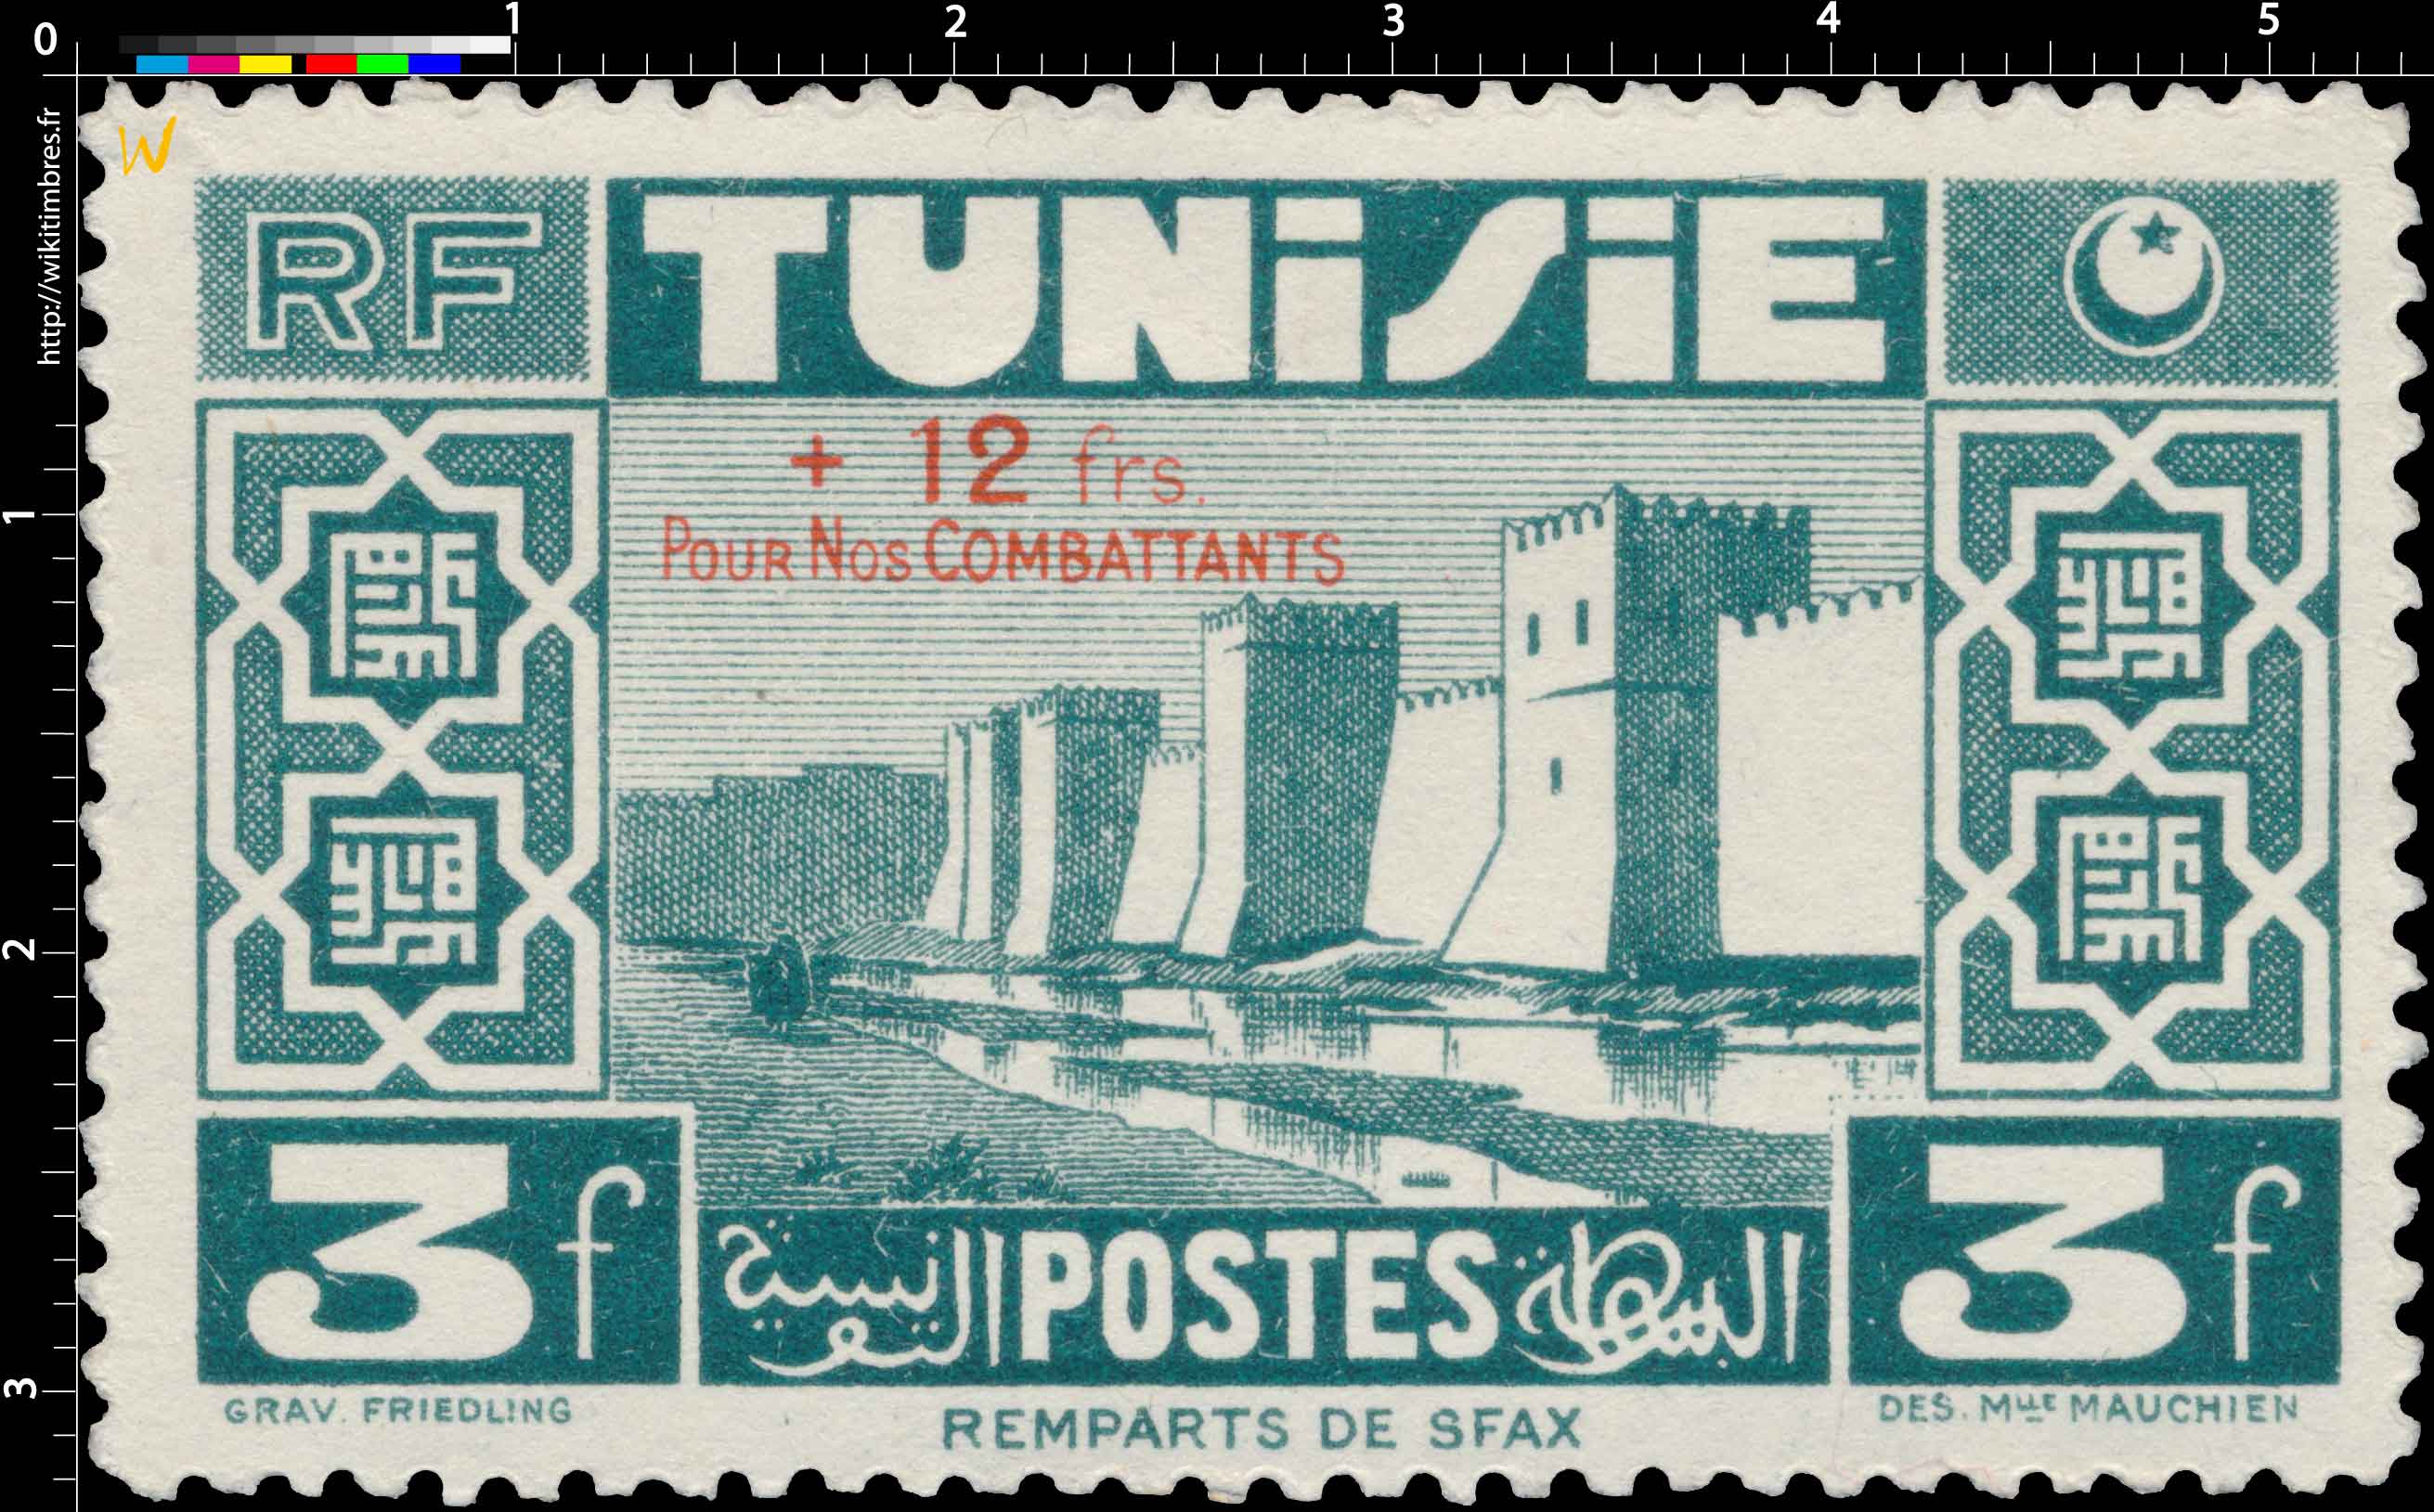 Tunisie - Remparts de Sfax